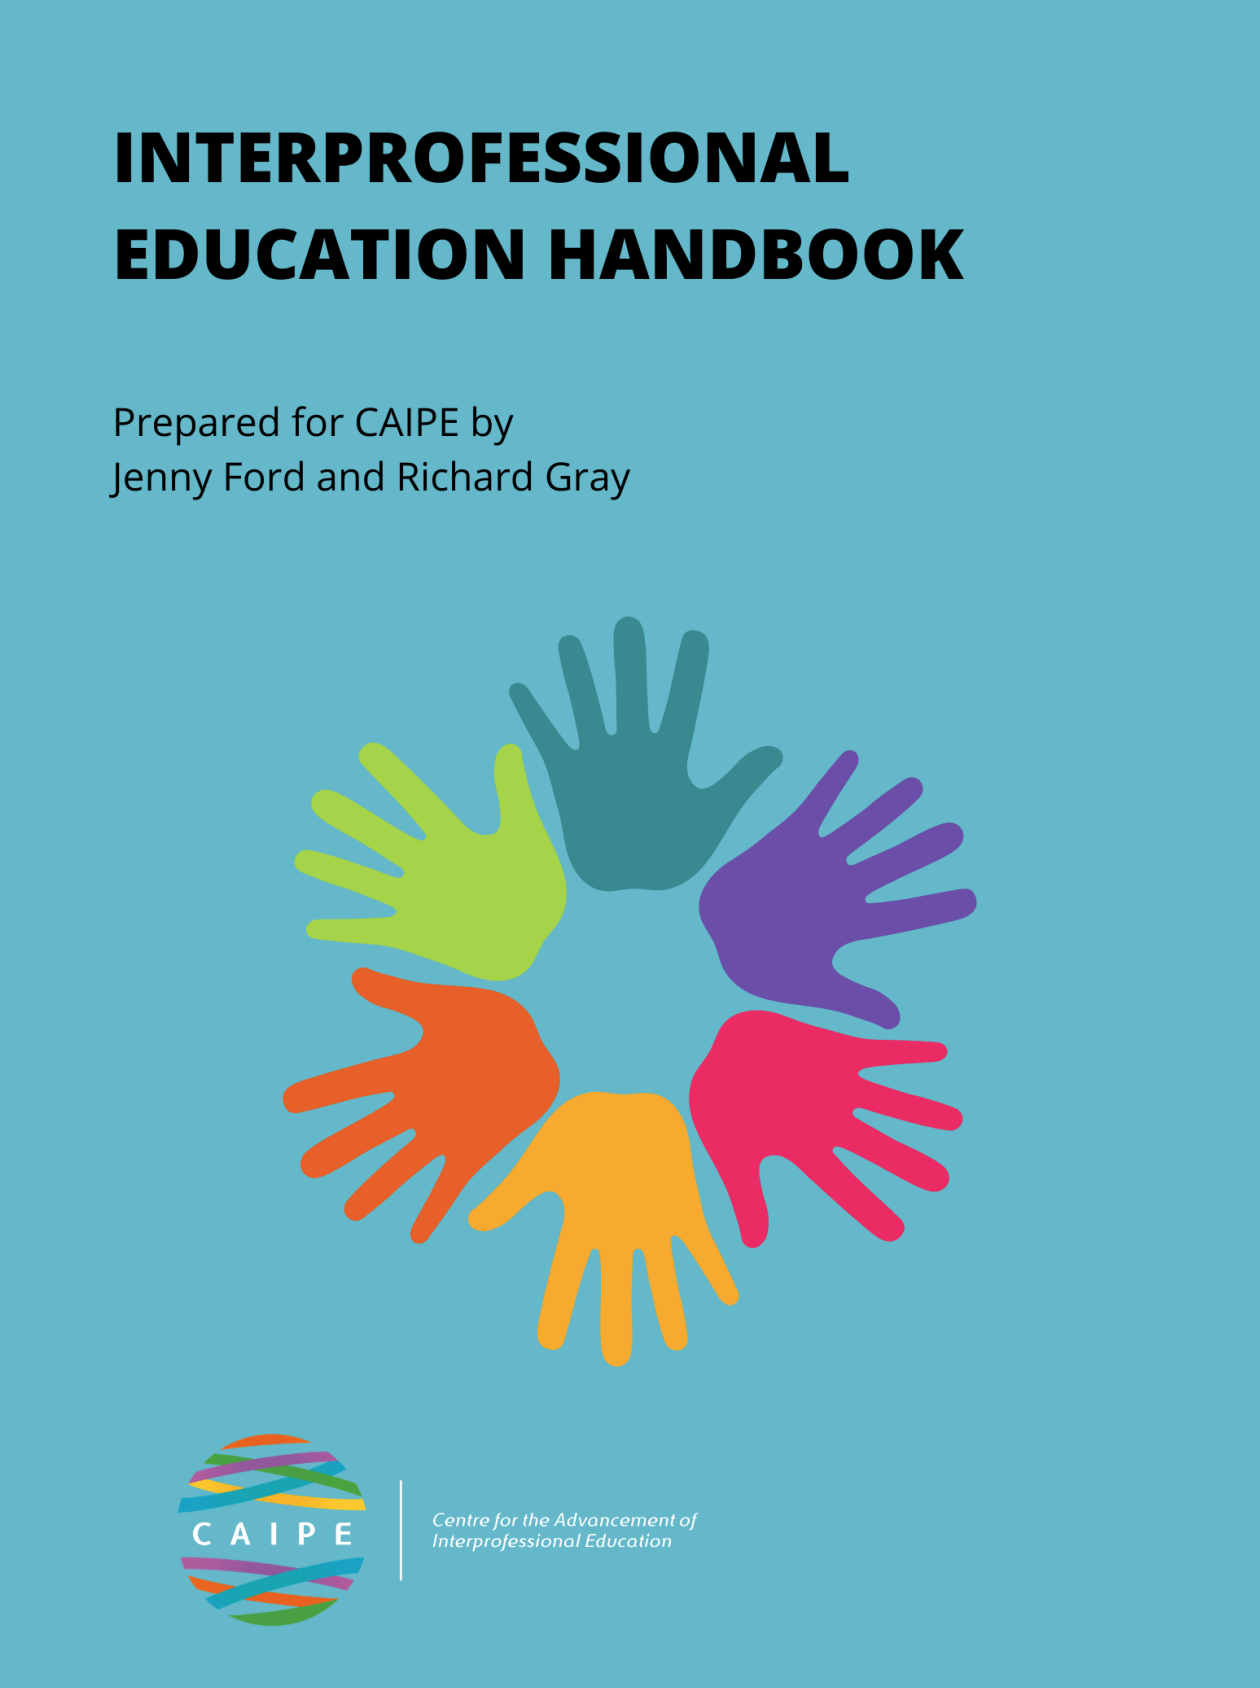 CAIPE Interprofessional Education Handbook 2021